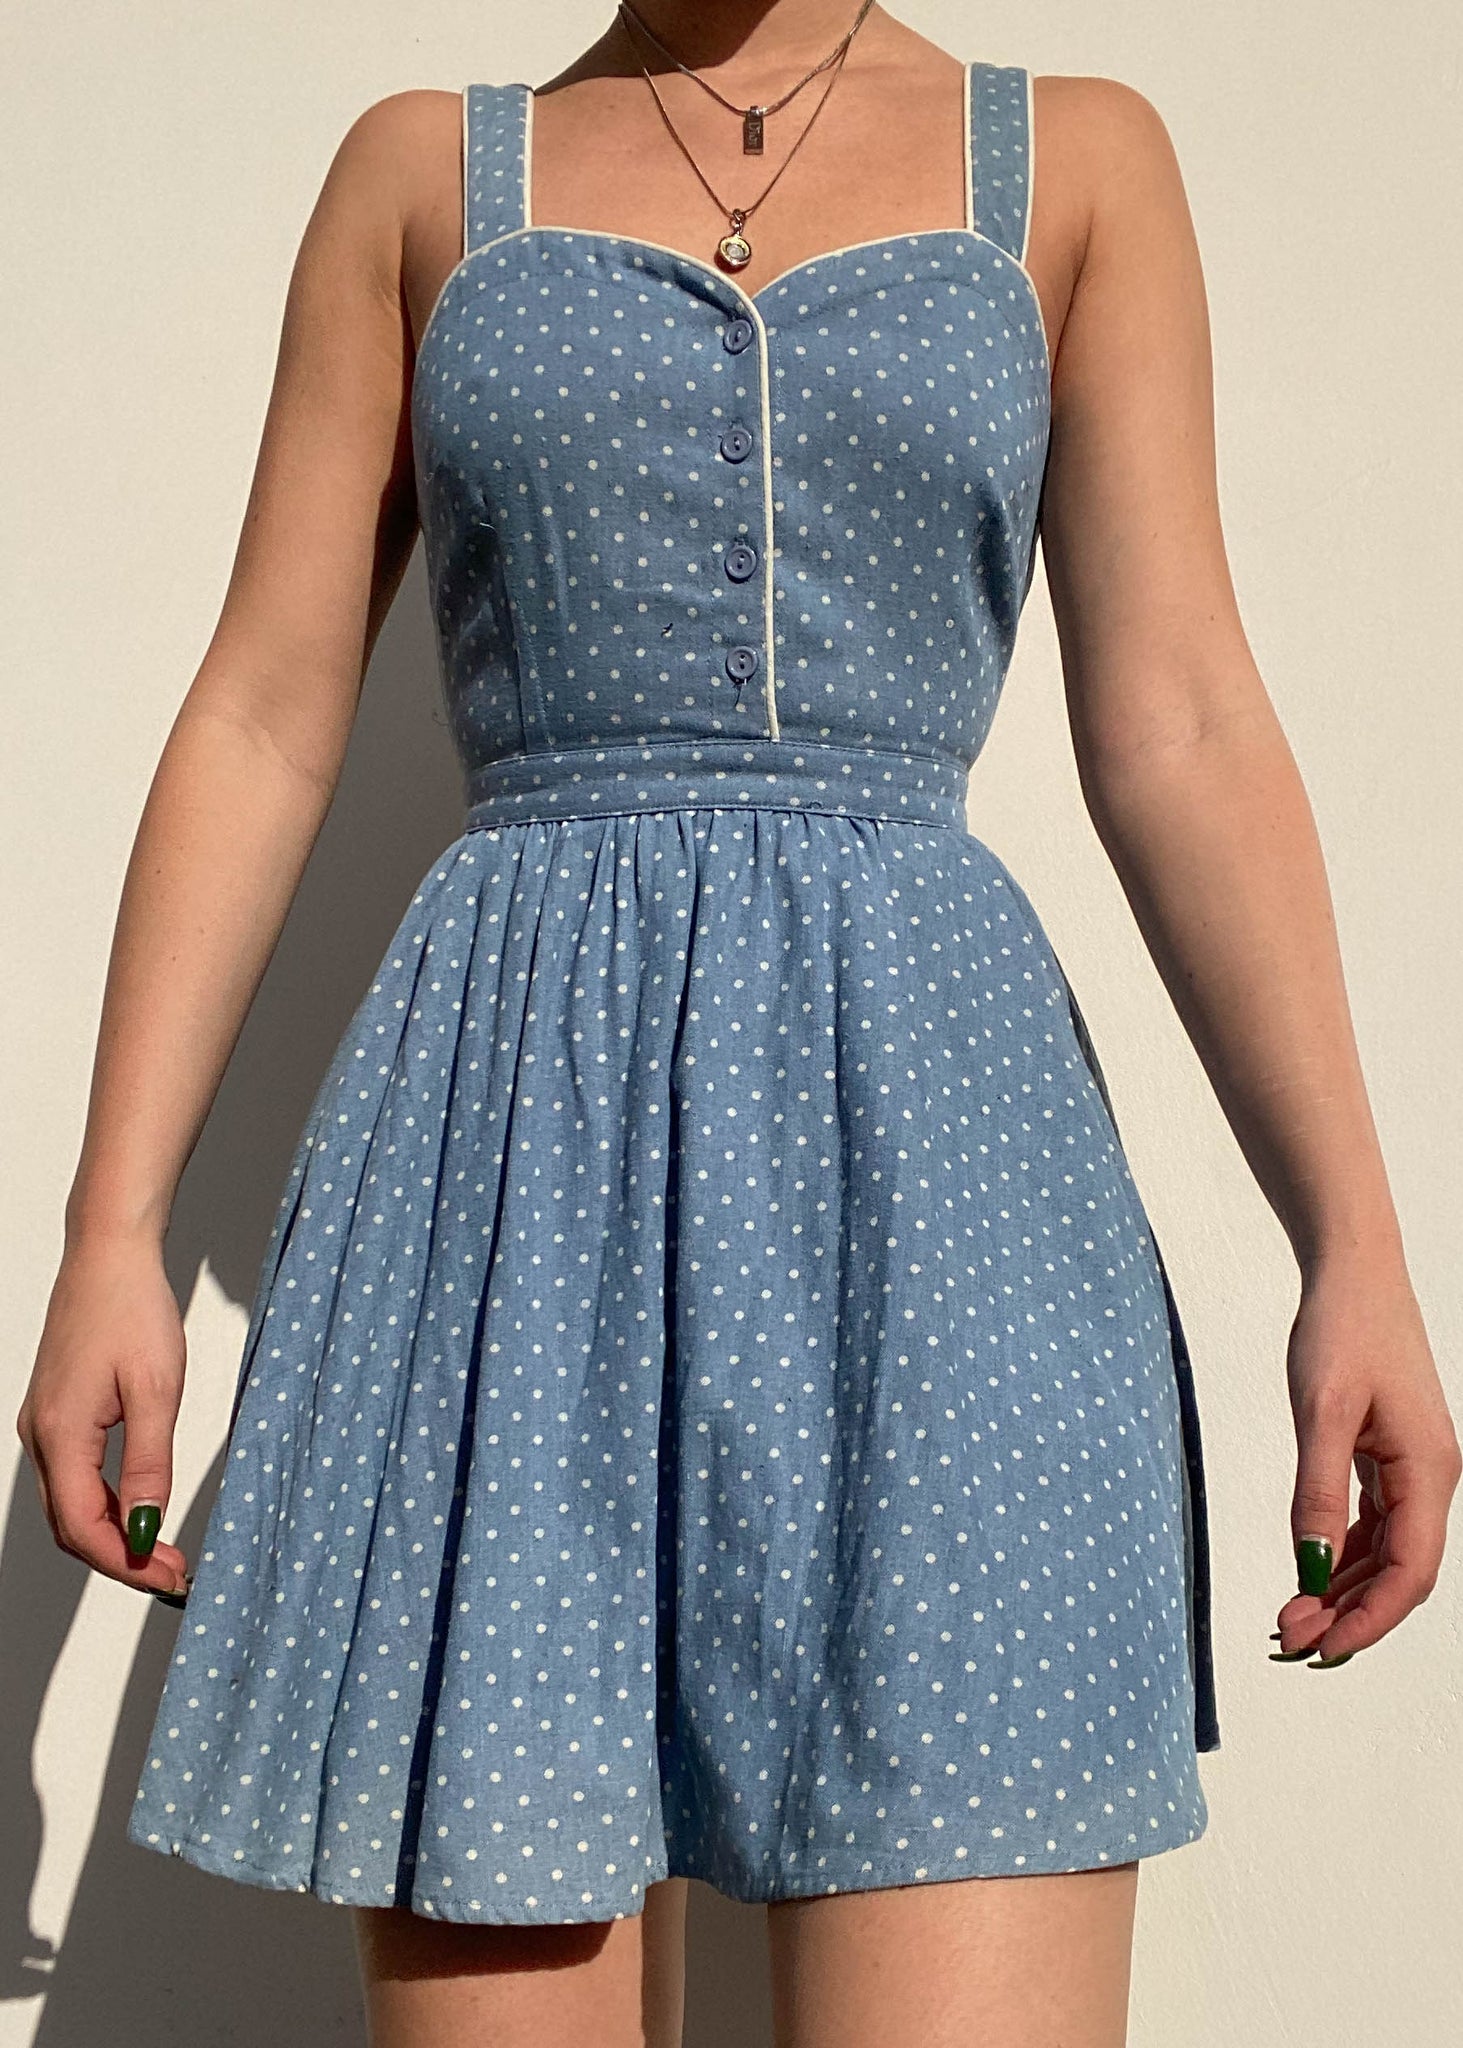 Vintage Polka Dot Denim Dress (S)